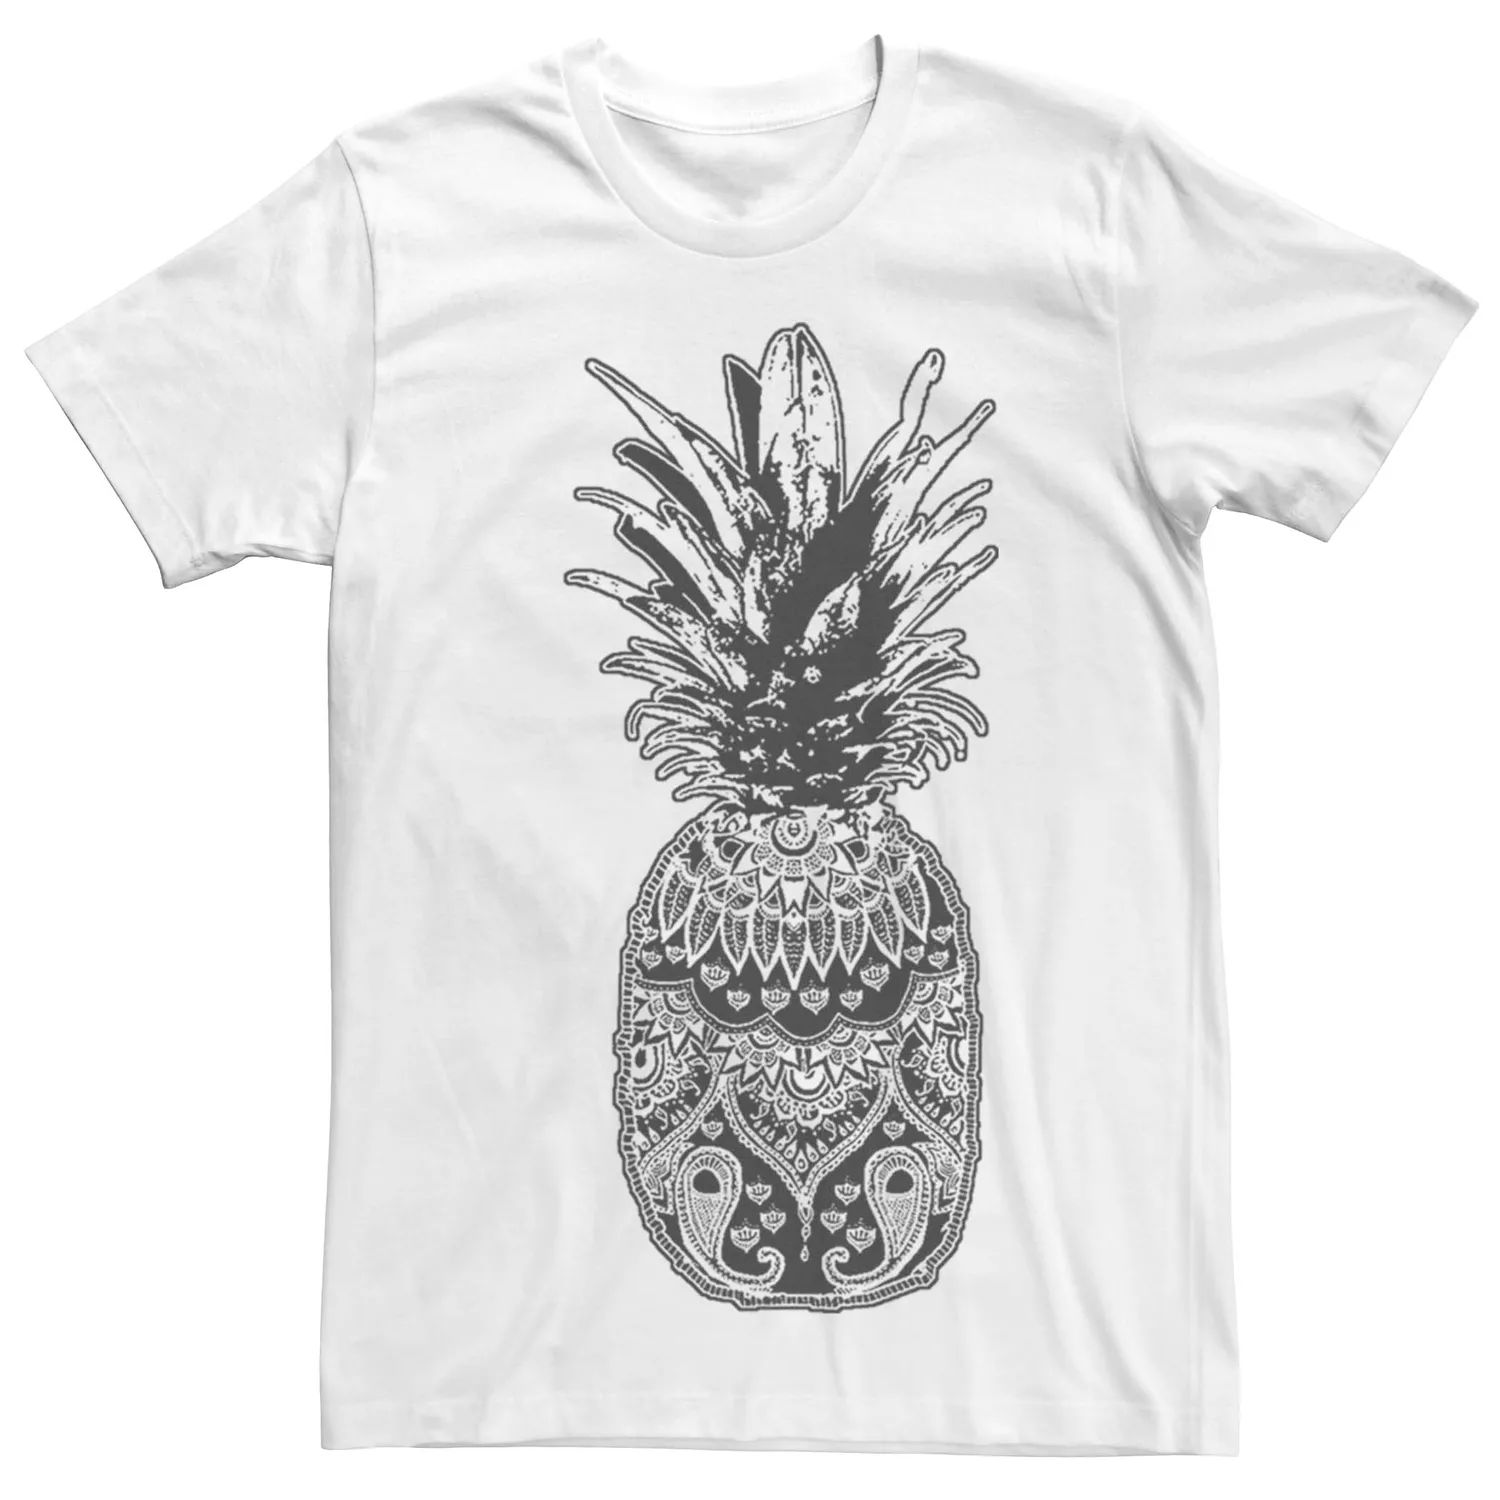 Мужская футболка с рисунком хны и ананасом Licensed Character